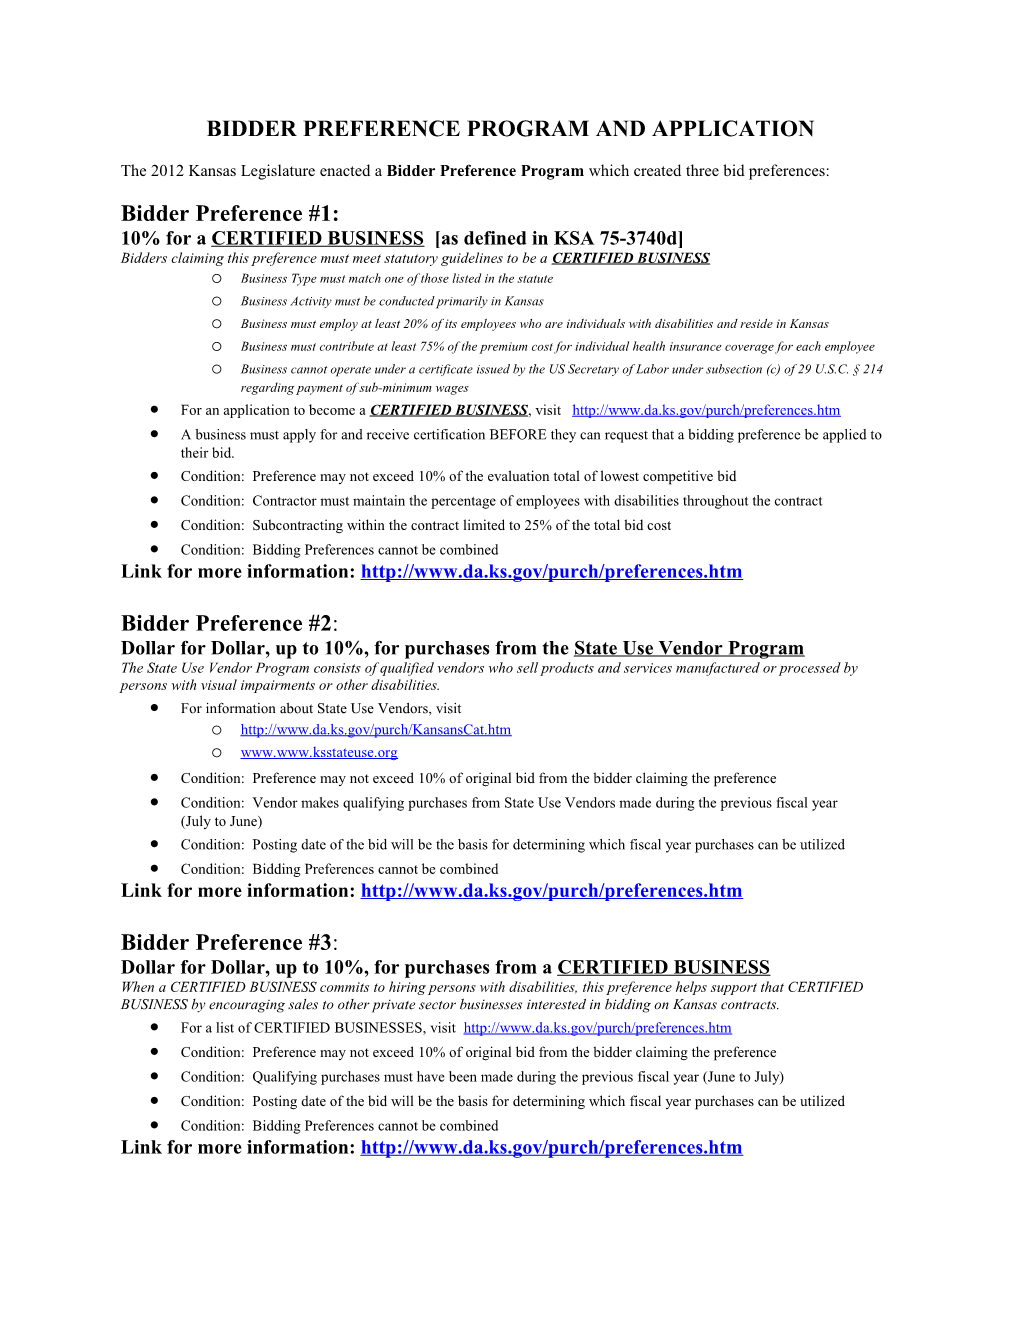 Bidder Preference Program and Application